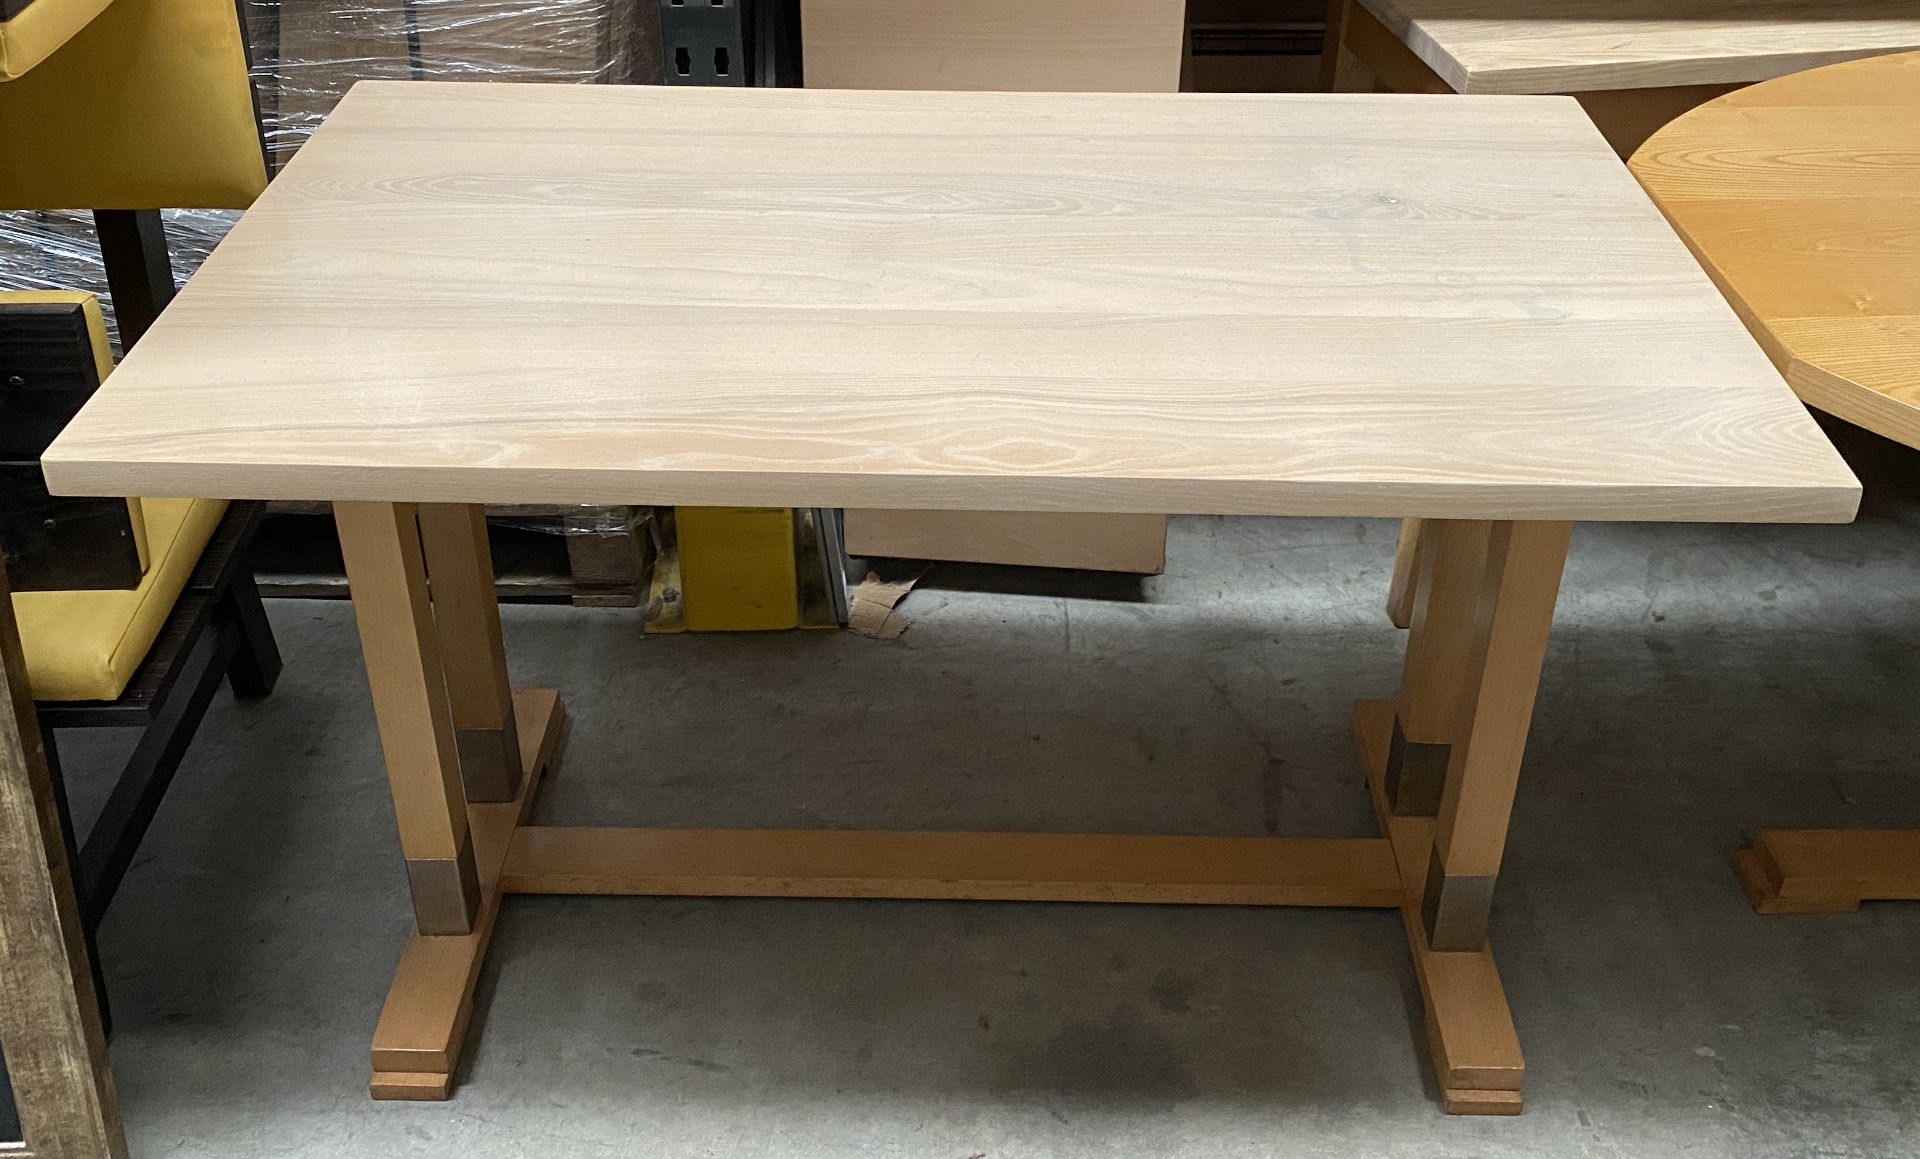 4 x Oak Laminate Rectangular Dining Tables on 4 Leg Base - 70cm x 120cm